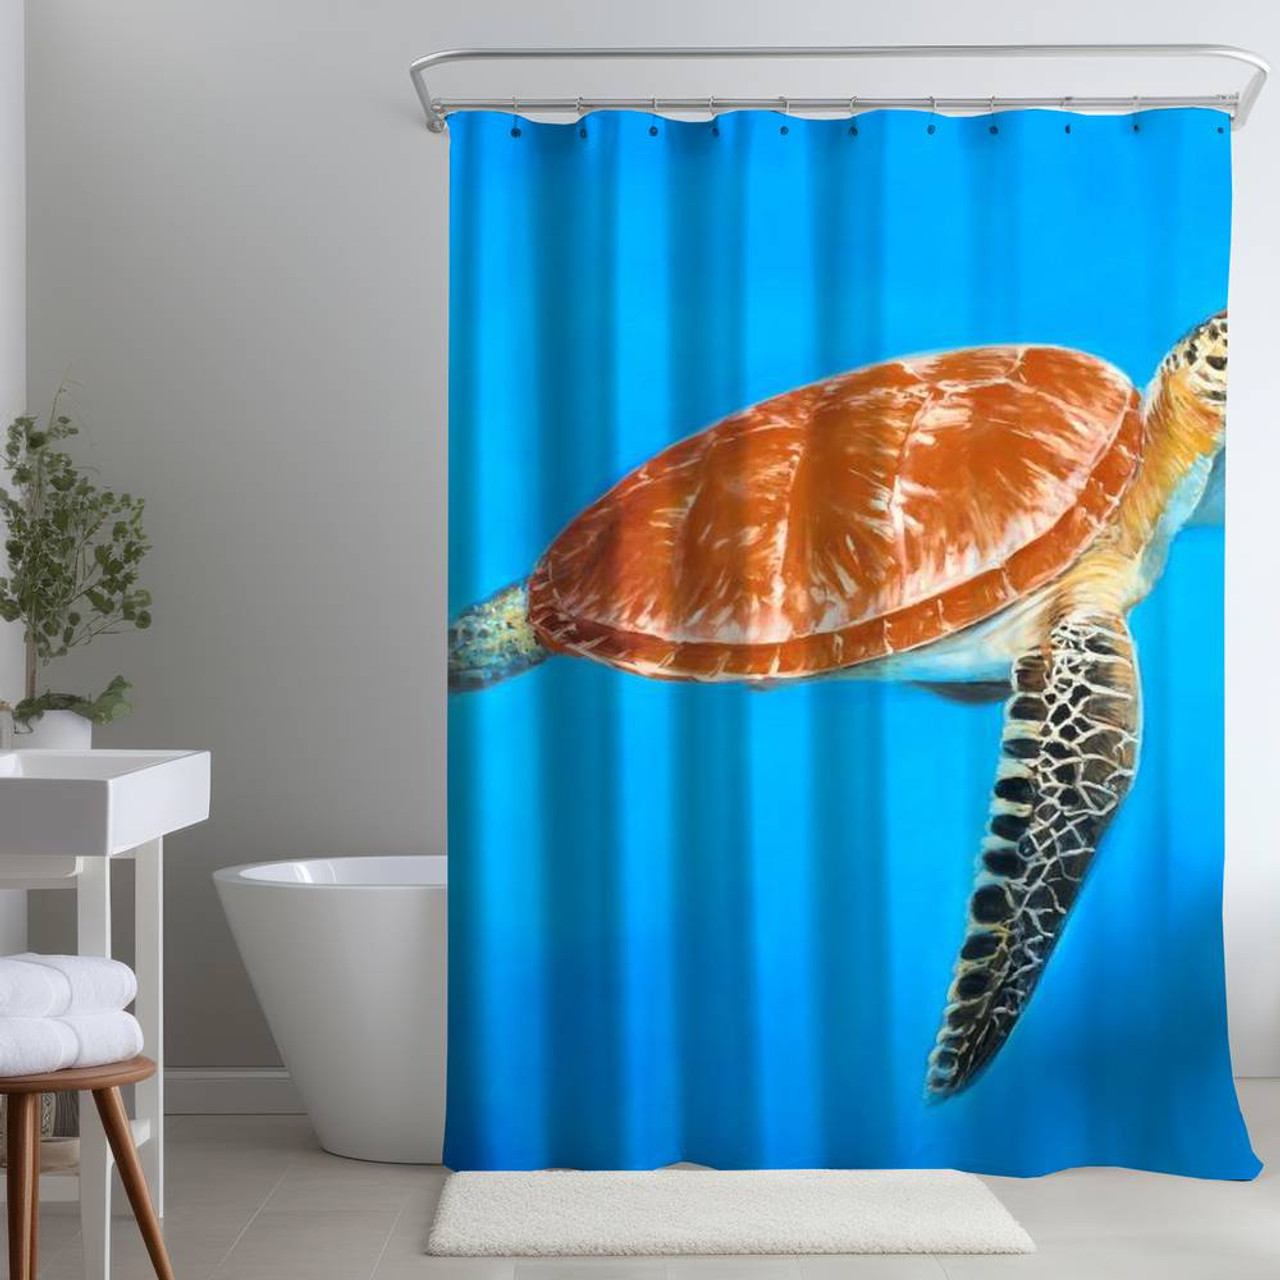 Swimming Red Sea Turtle Shower Curtain - Animal Decor